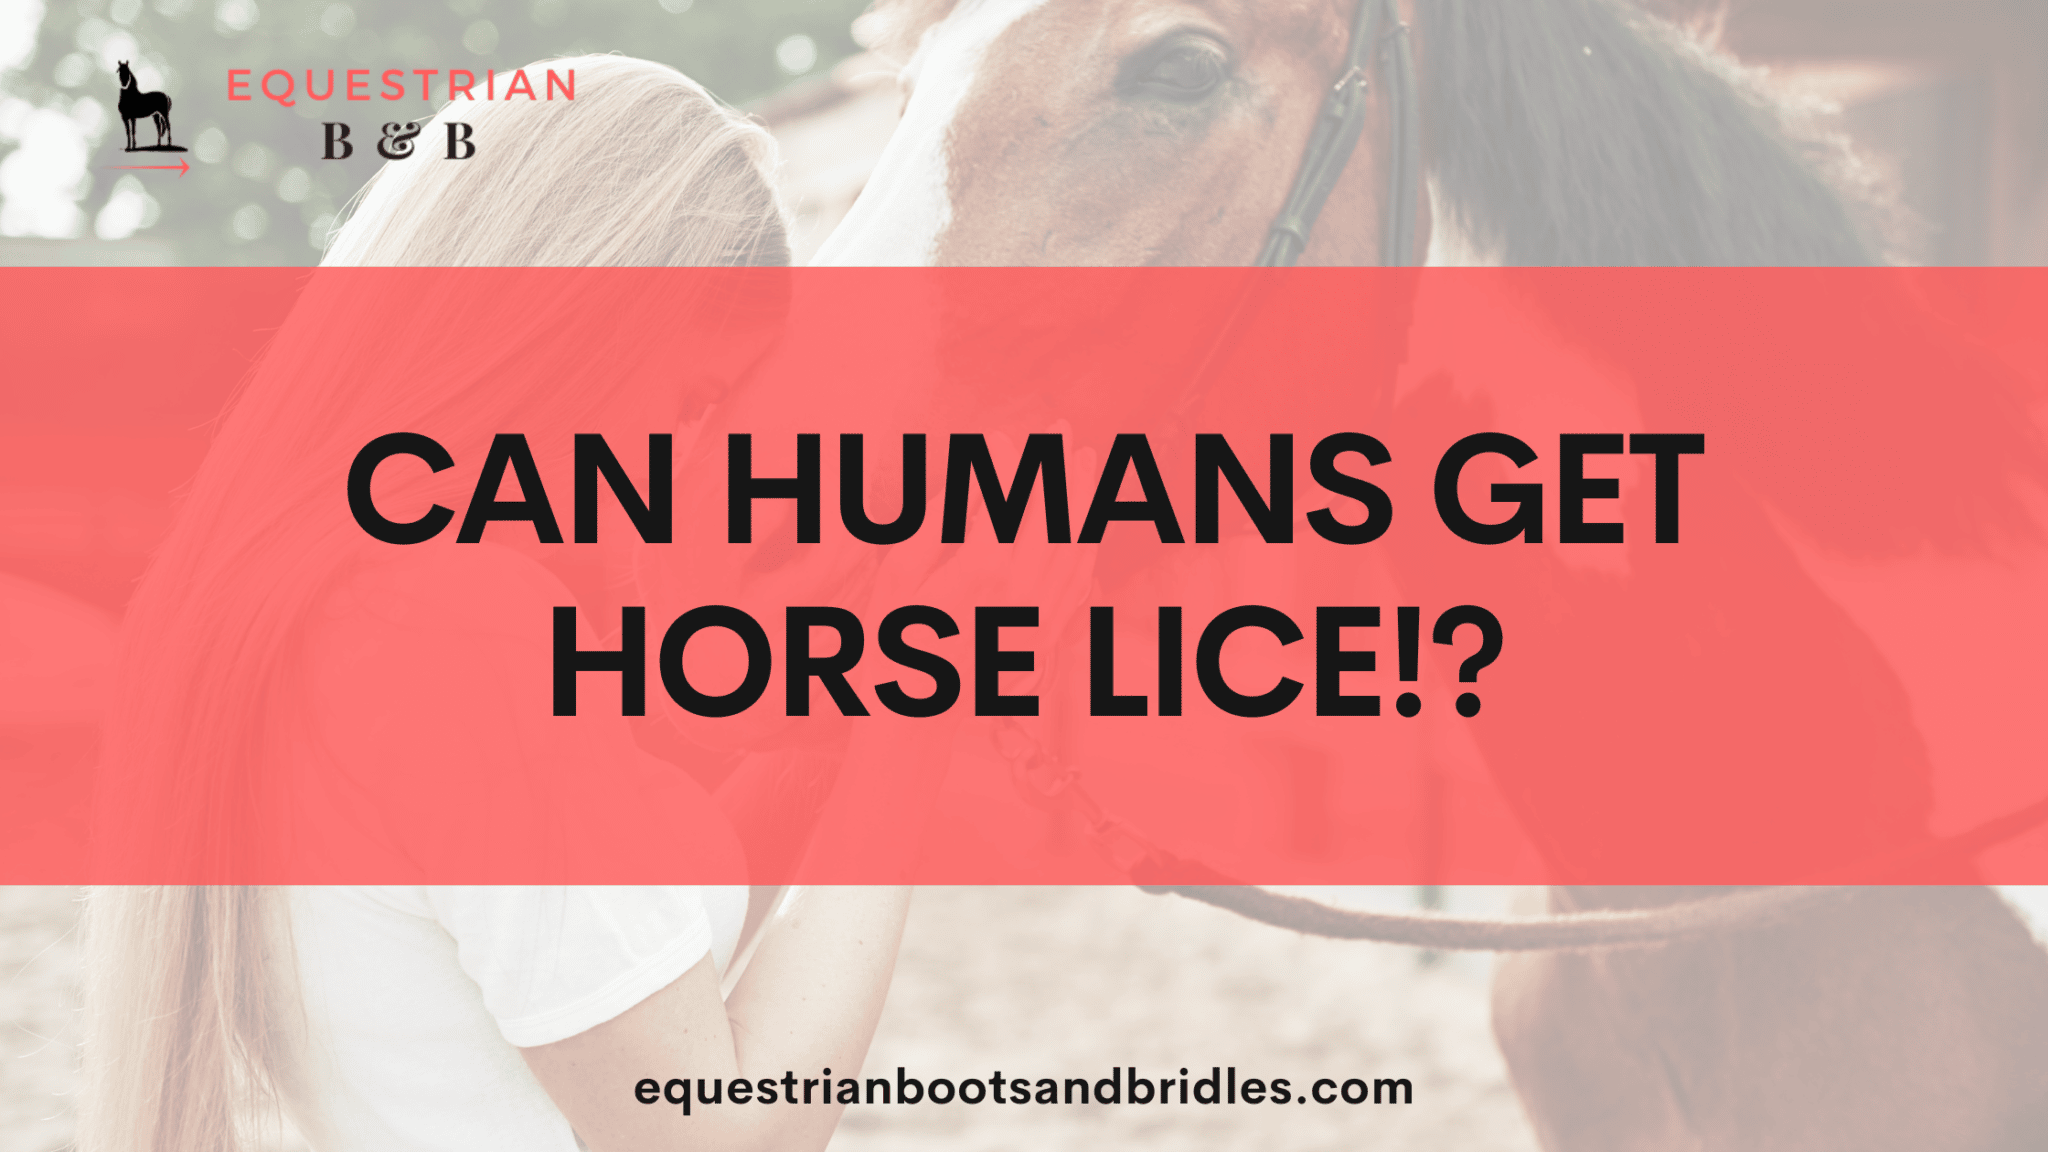 can humans get horse lice on equestrianbootsandbridles.com